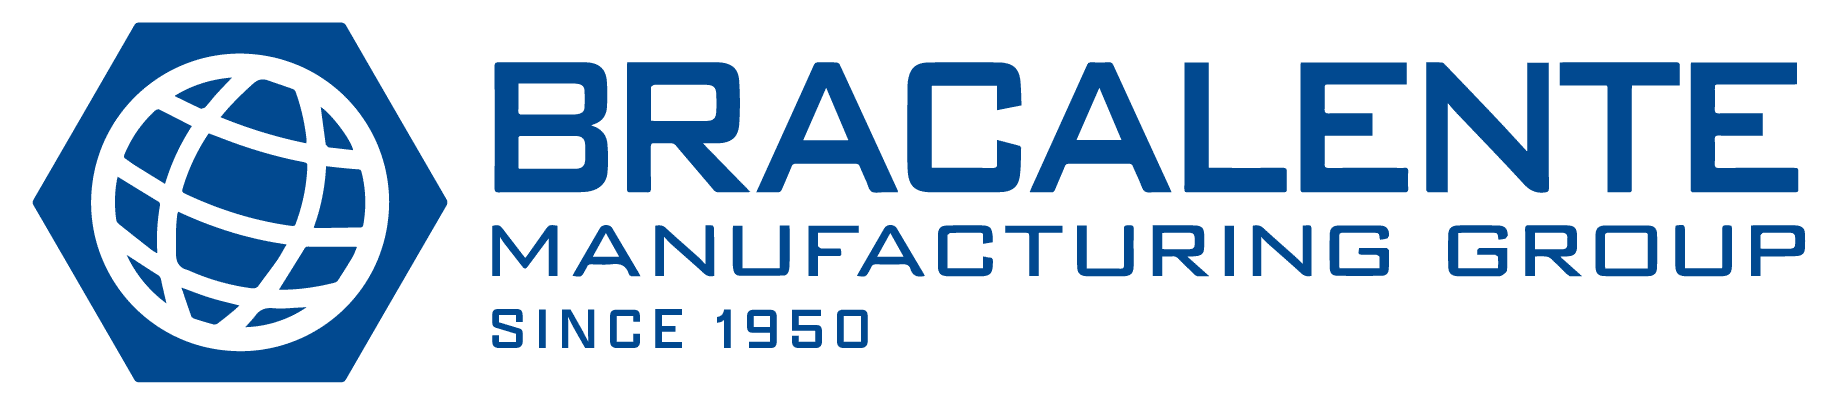 Bracalente Manufacturing Group tun 1950